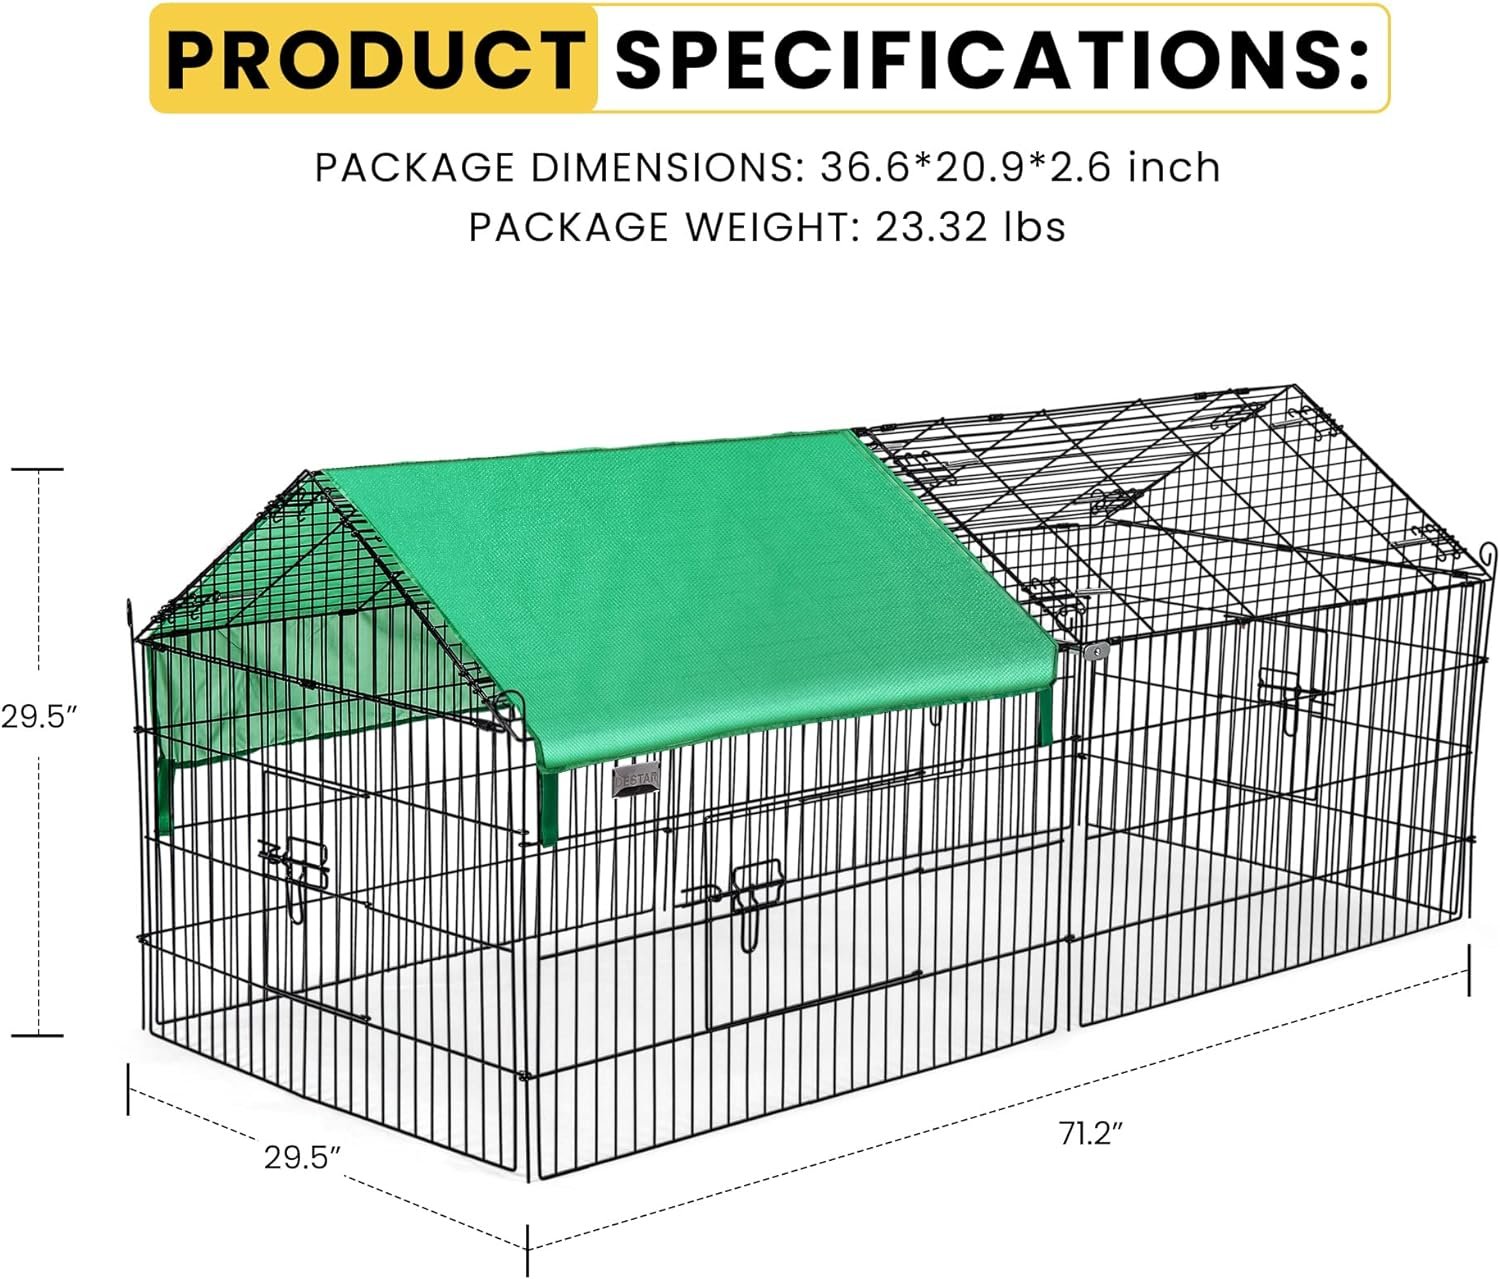 DEStar 71” x 30” Foldable Outdoor Backyard Metal Coop Chicken Cage Enclosure Duck Rabbit Cat Crate Playpen Exercise Pen with Weather Proof Cover